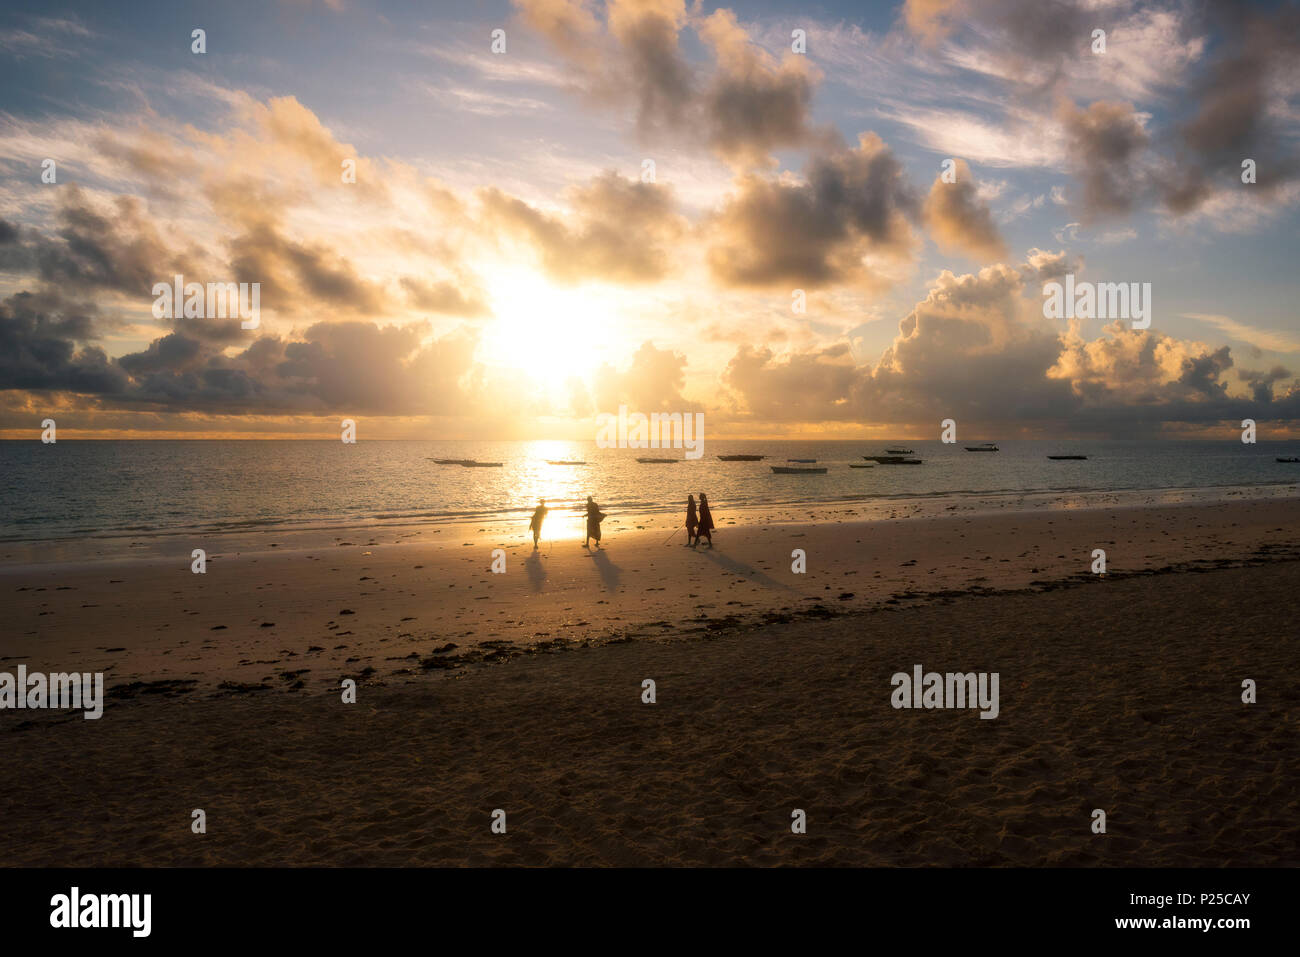 East Africa, Tanzania, Zanzibar, sunrise on Kiwengwa beach with a masai group. Stock Photo